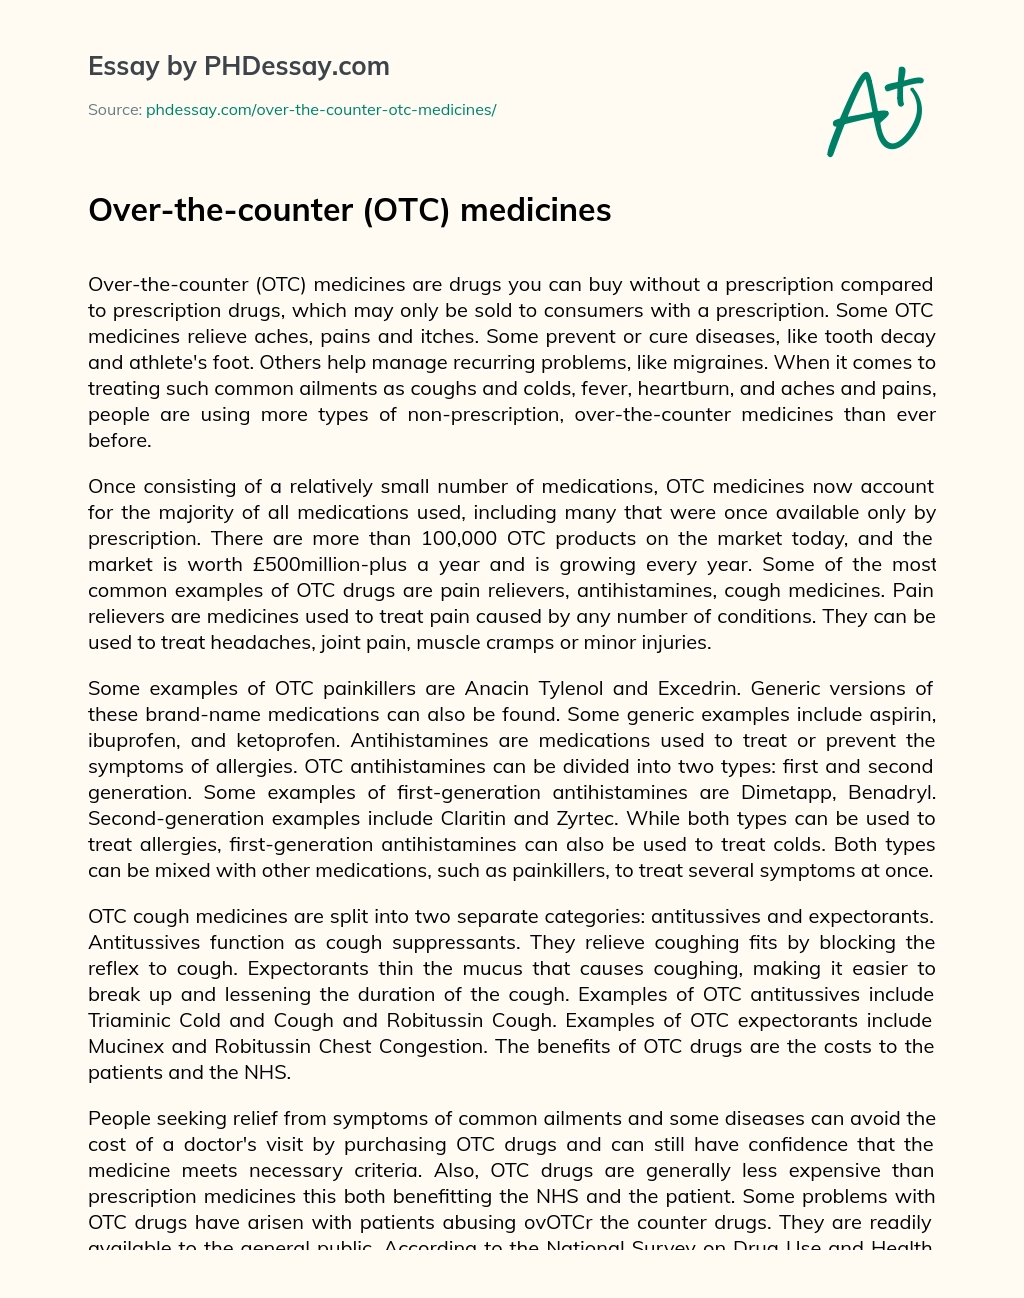 Over-the-counter (OTC) medicines essay